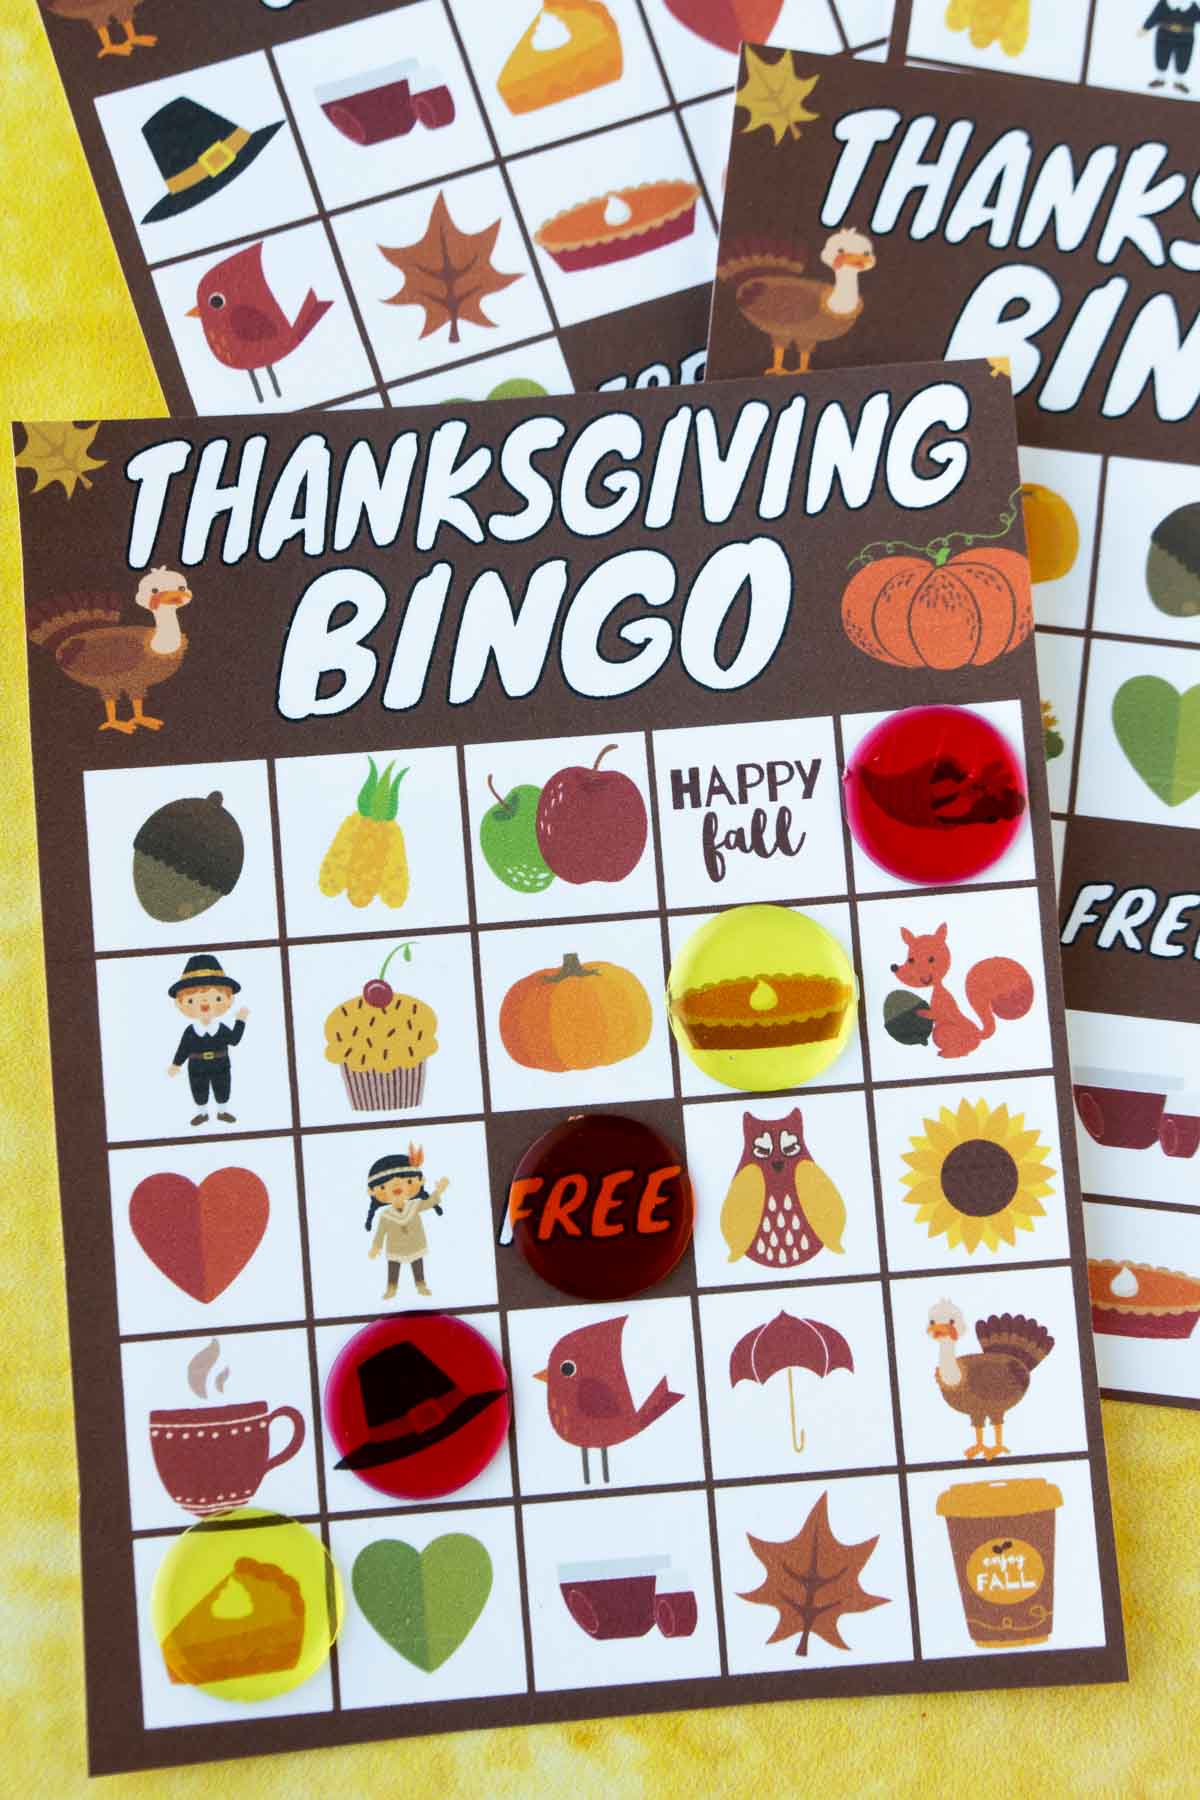 Thanksgiving bingo card with bingo markers